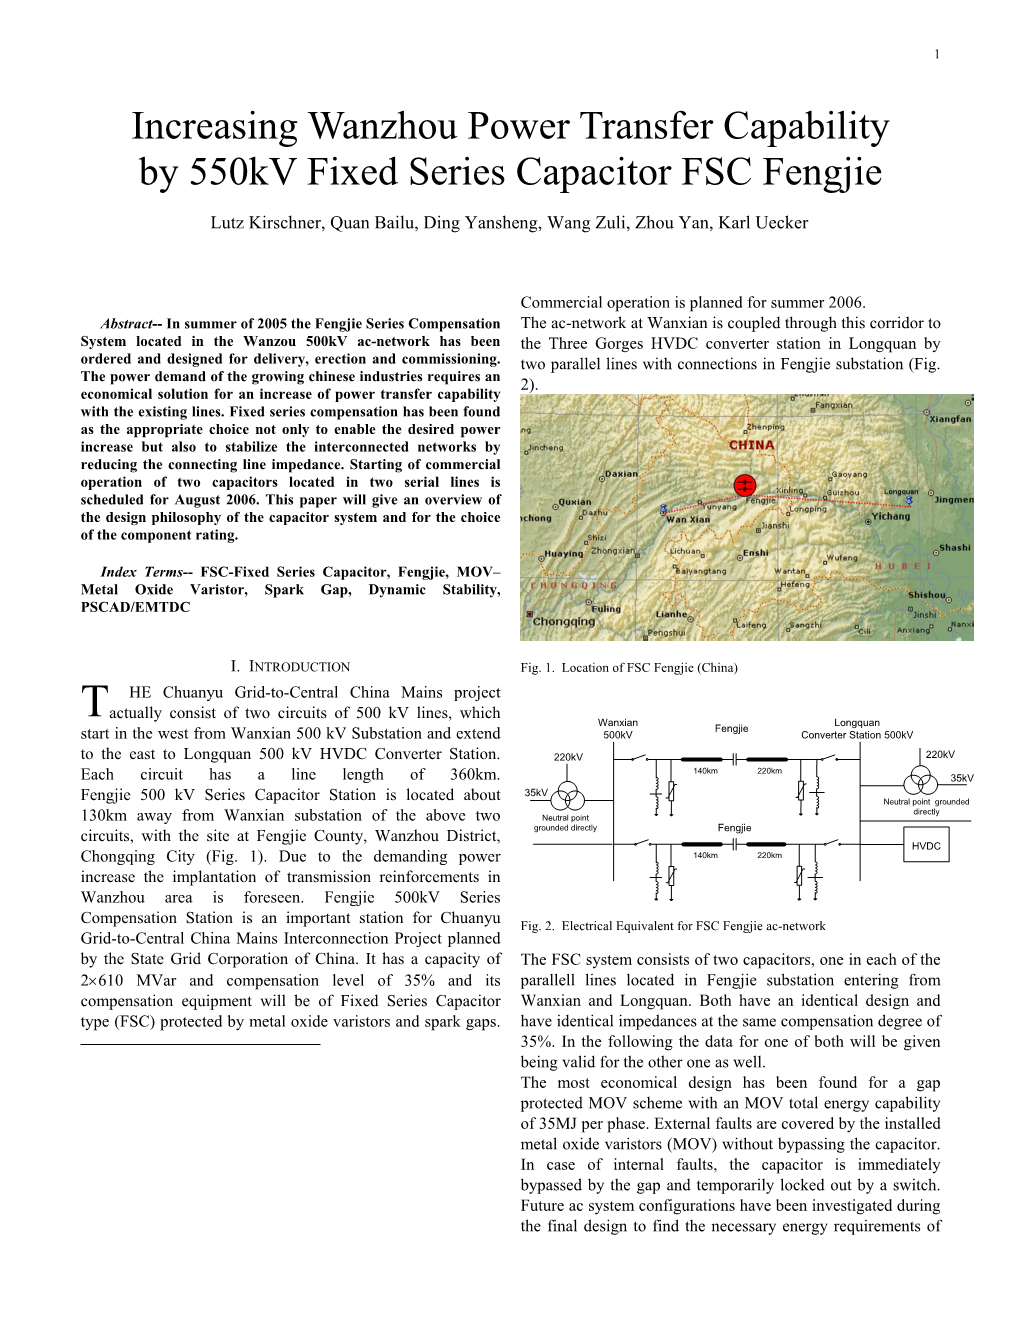 Increasing Wanzhou Power Transfer Capability by 550Kv Fixed Series Capacitor FSC Fengjie